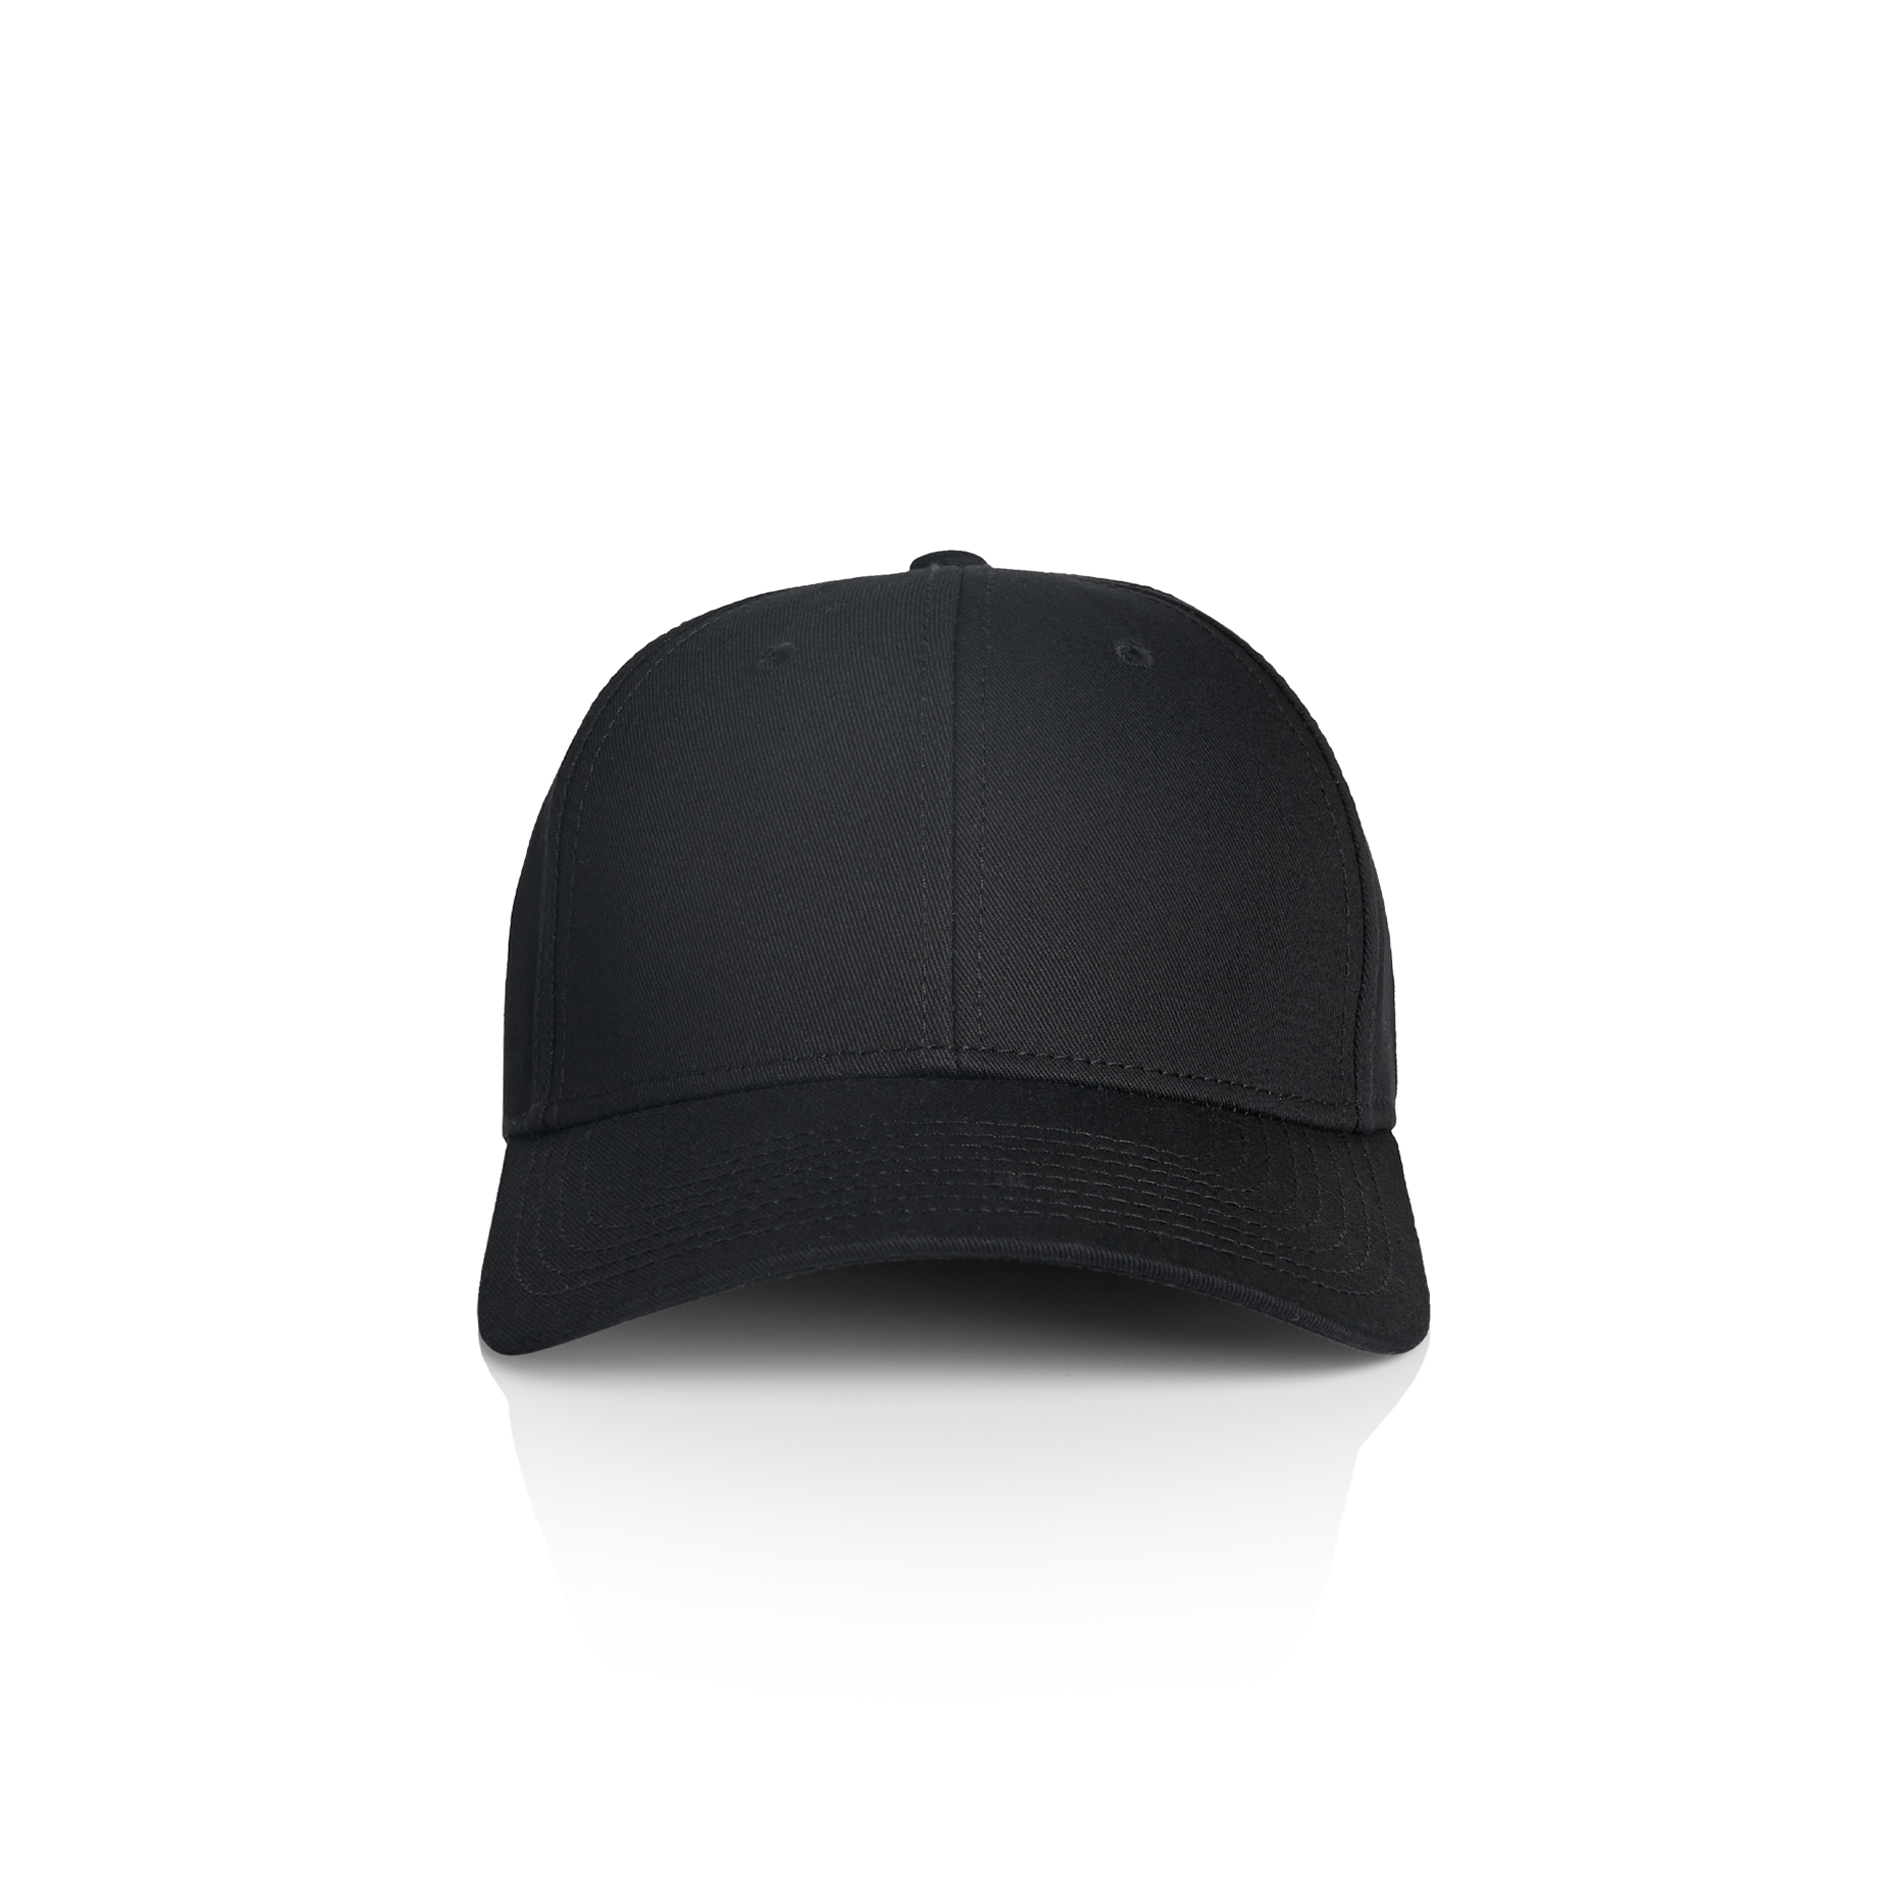 AS Colour Grade Cap - Black - Uniform Edit